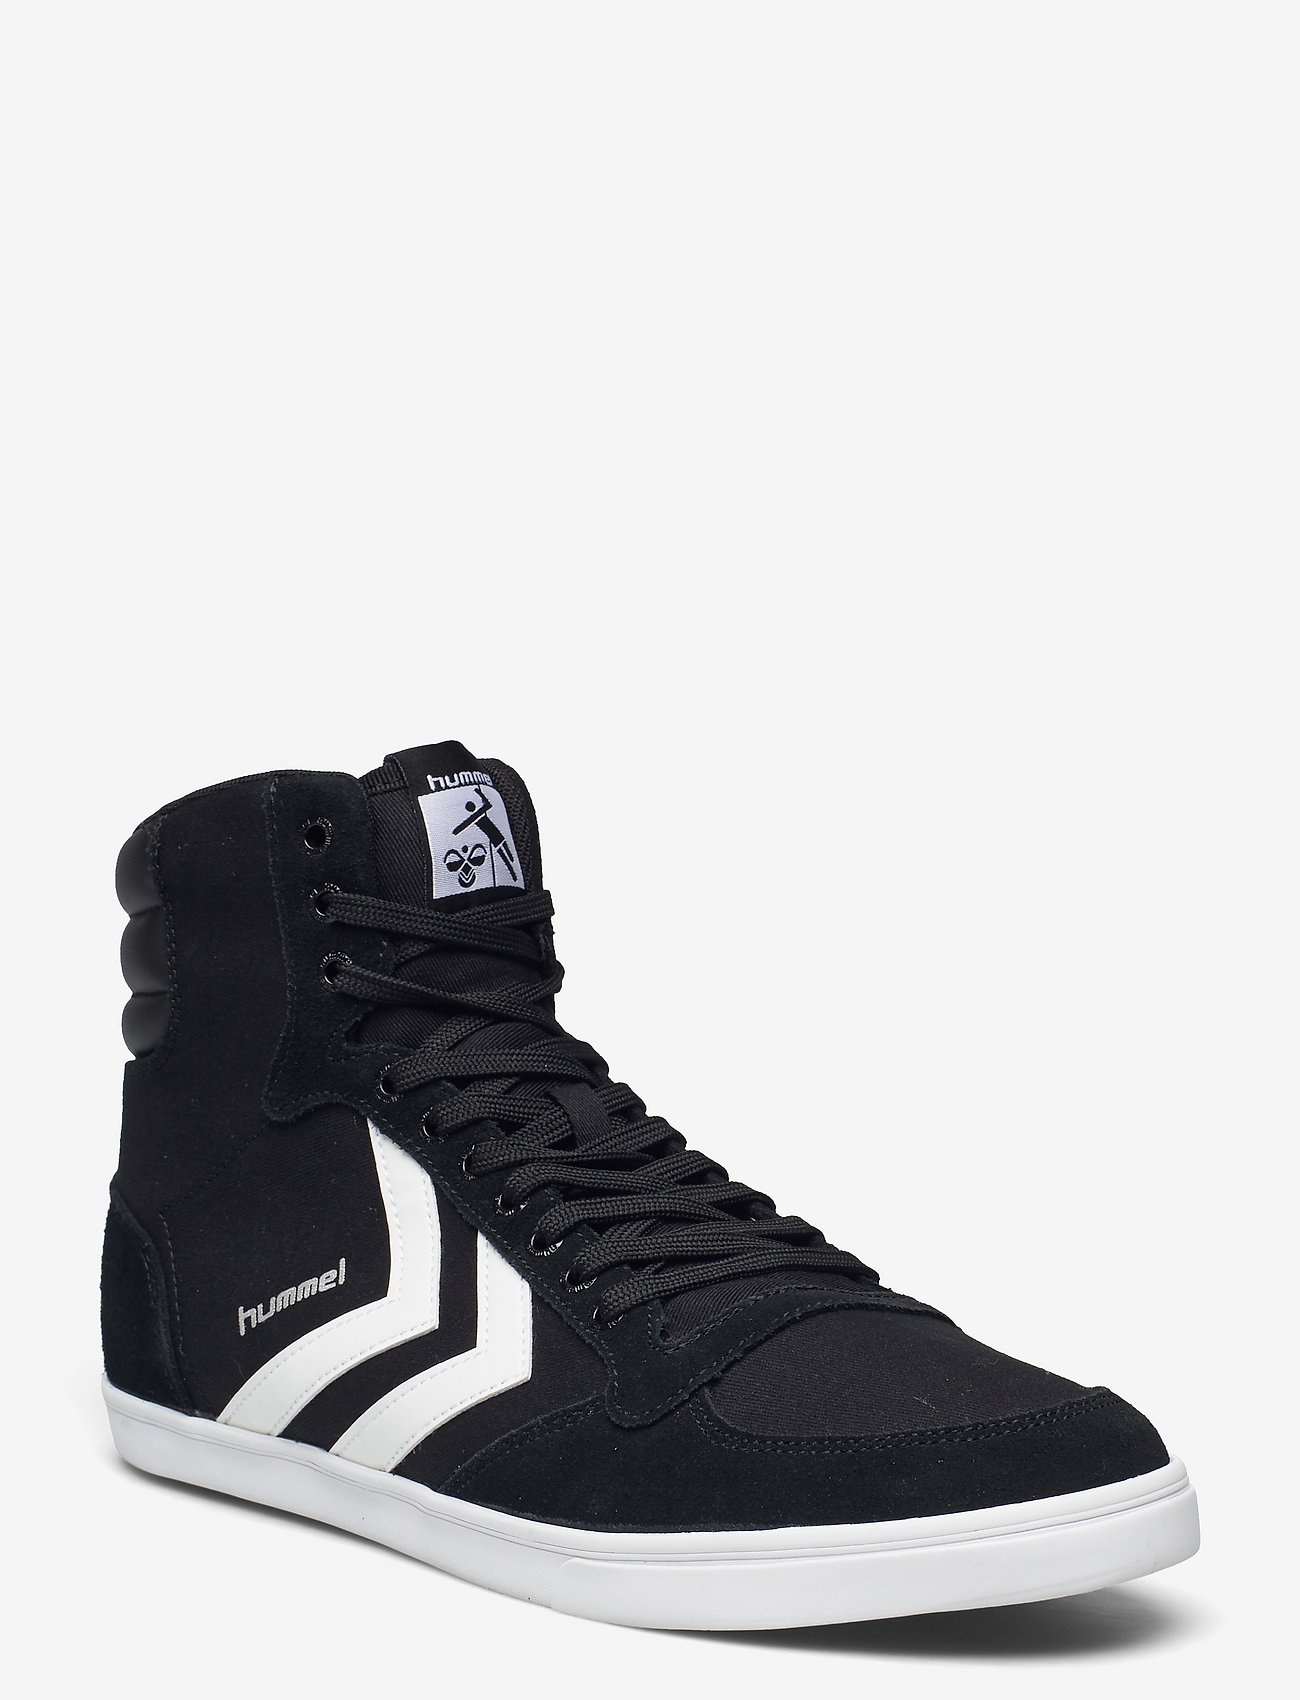 Hummel - HUMMEL SLIMMER STADIL HIGH - hoge sneakers - black/white kh - 0